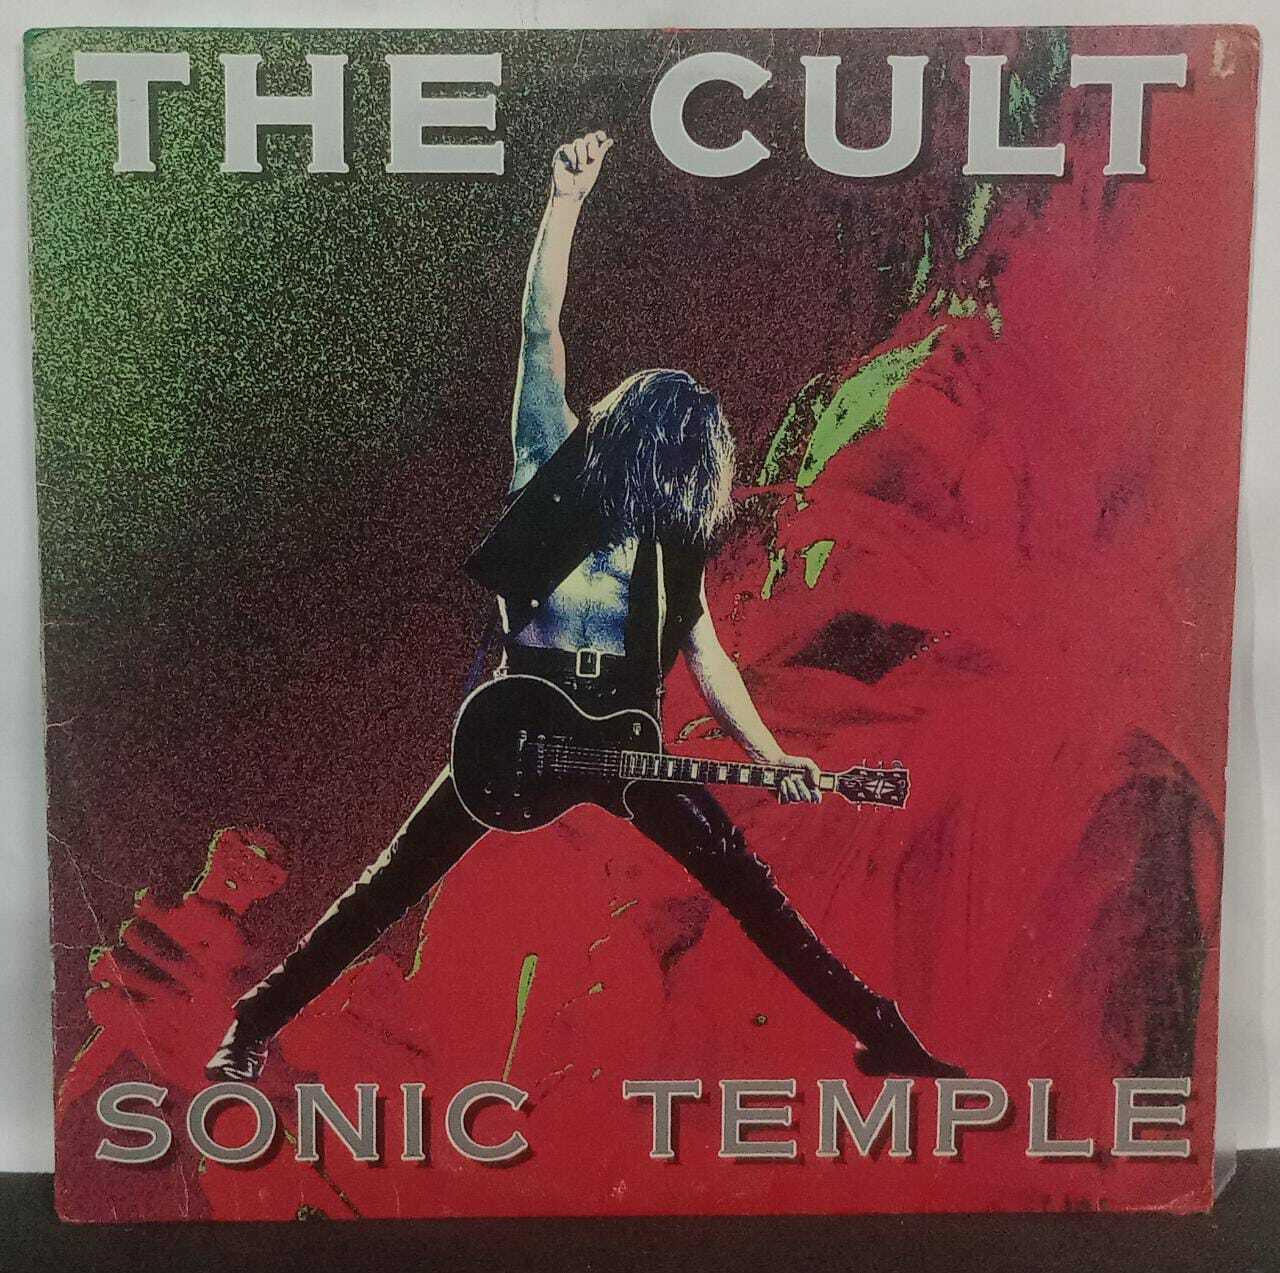 Vinil - Cult the - Sonic Temple